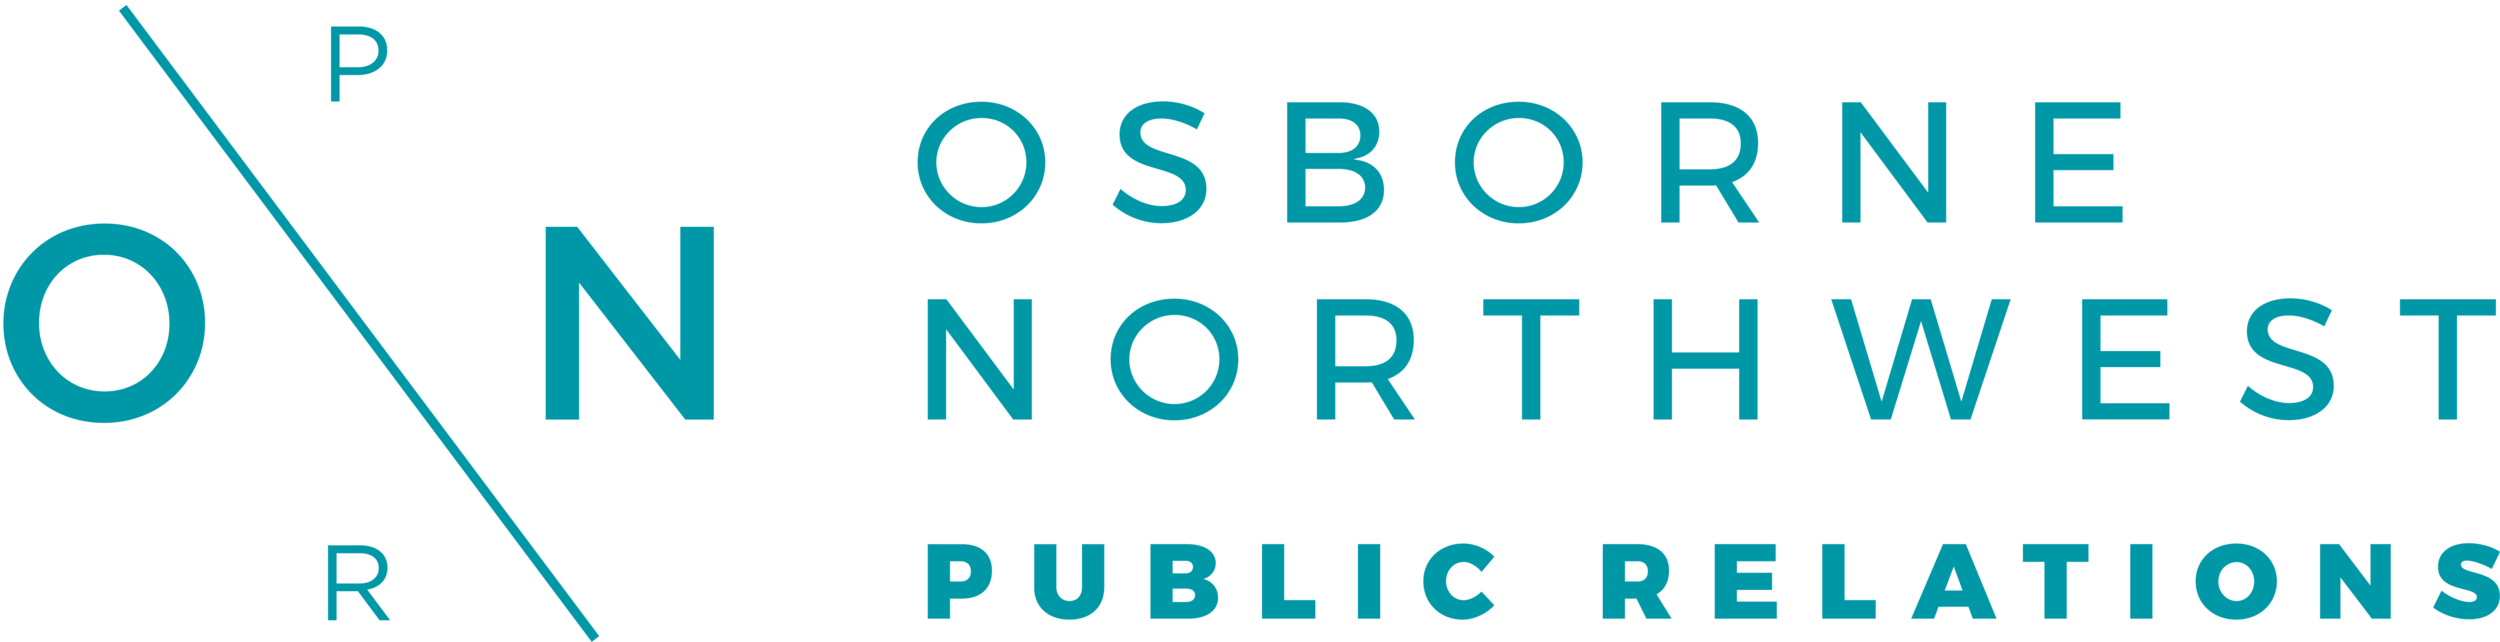 Osborne Northwest Public Relations